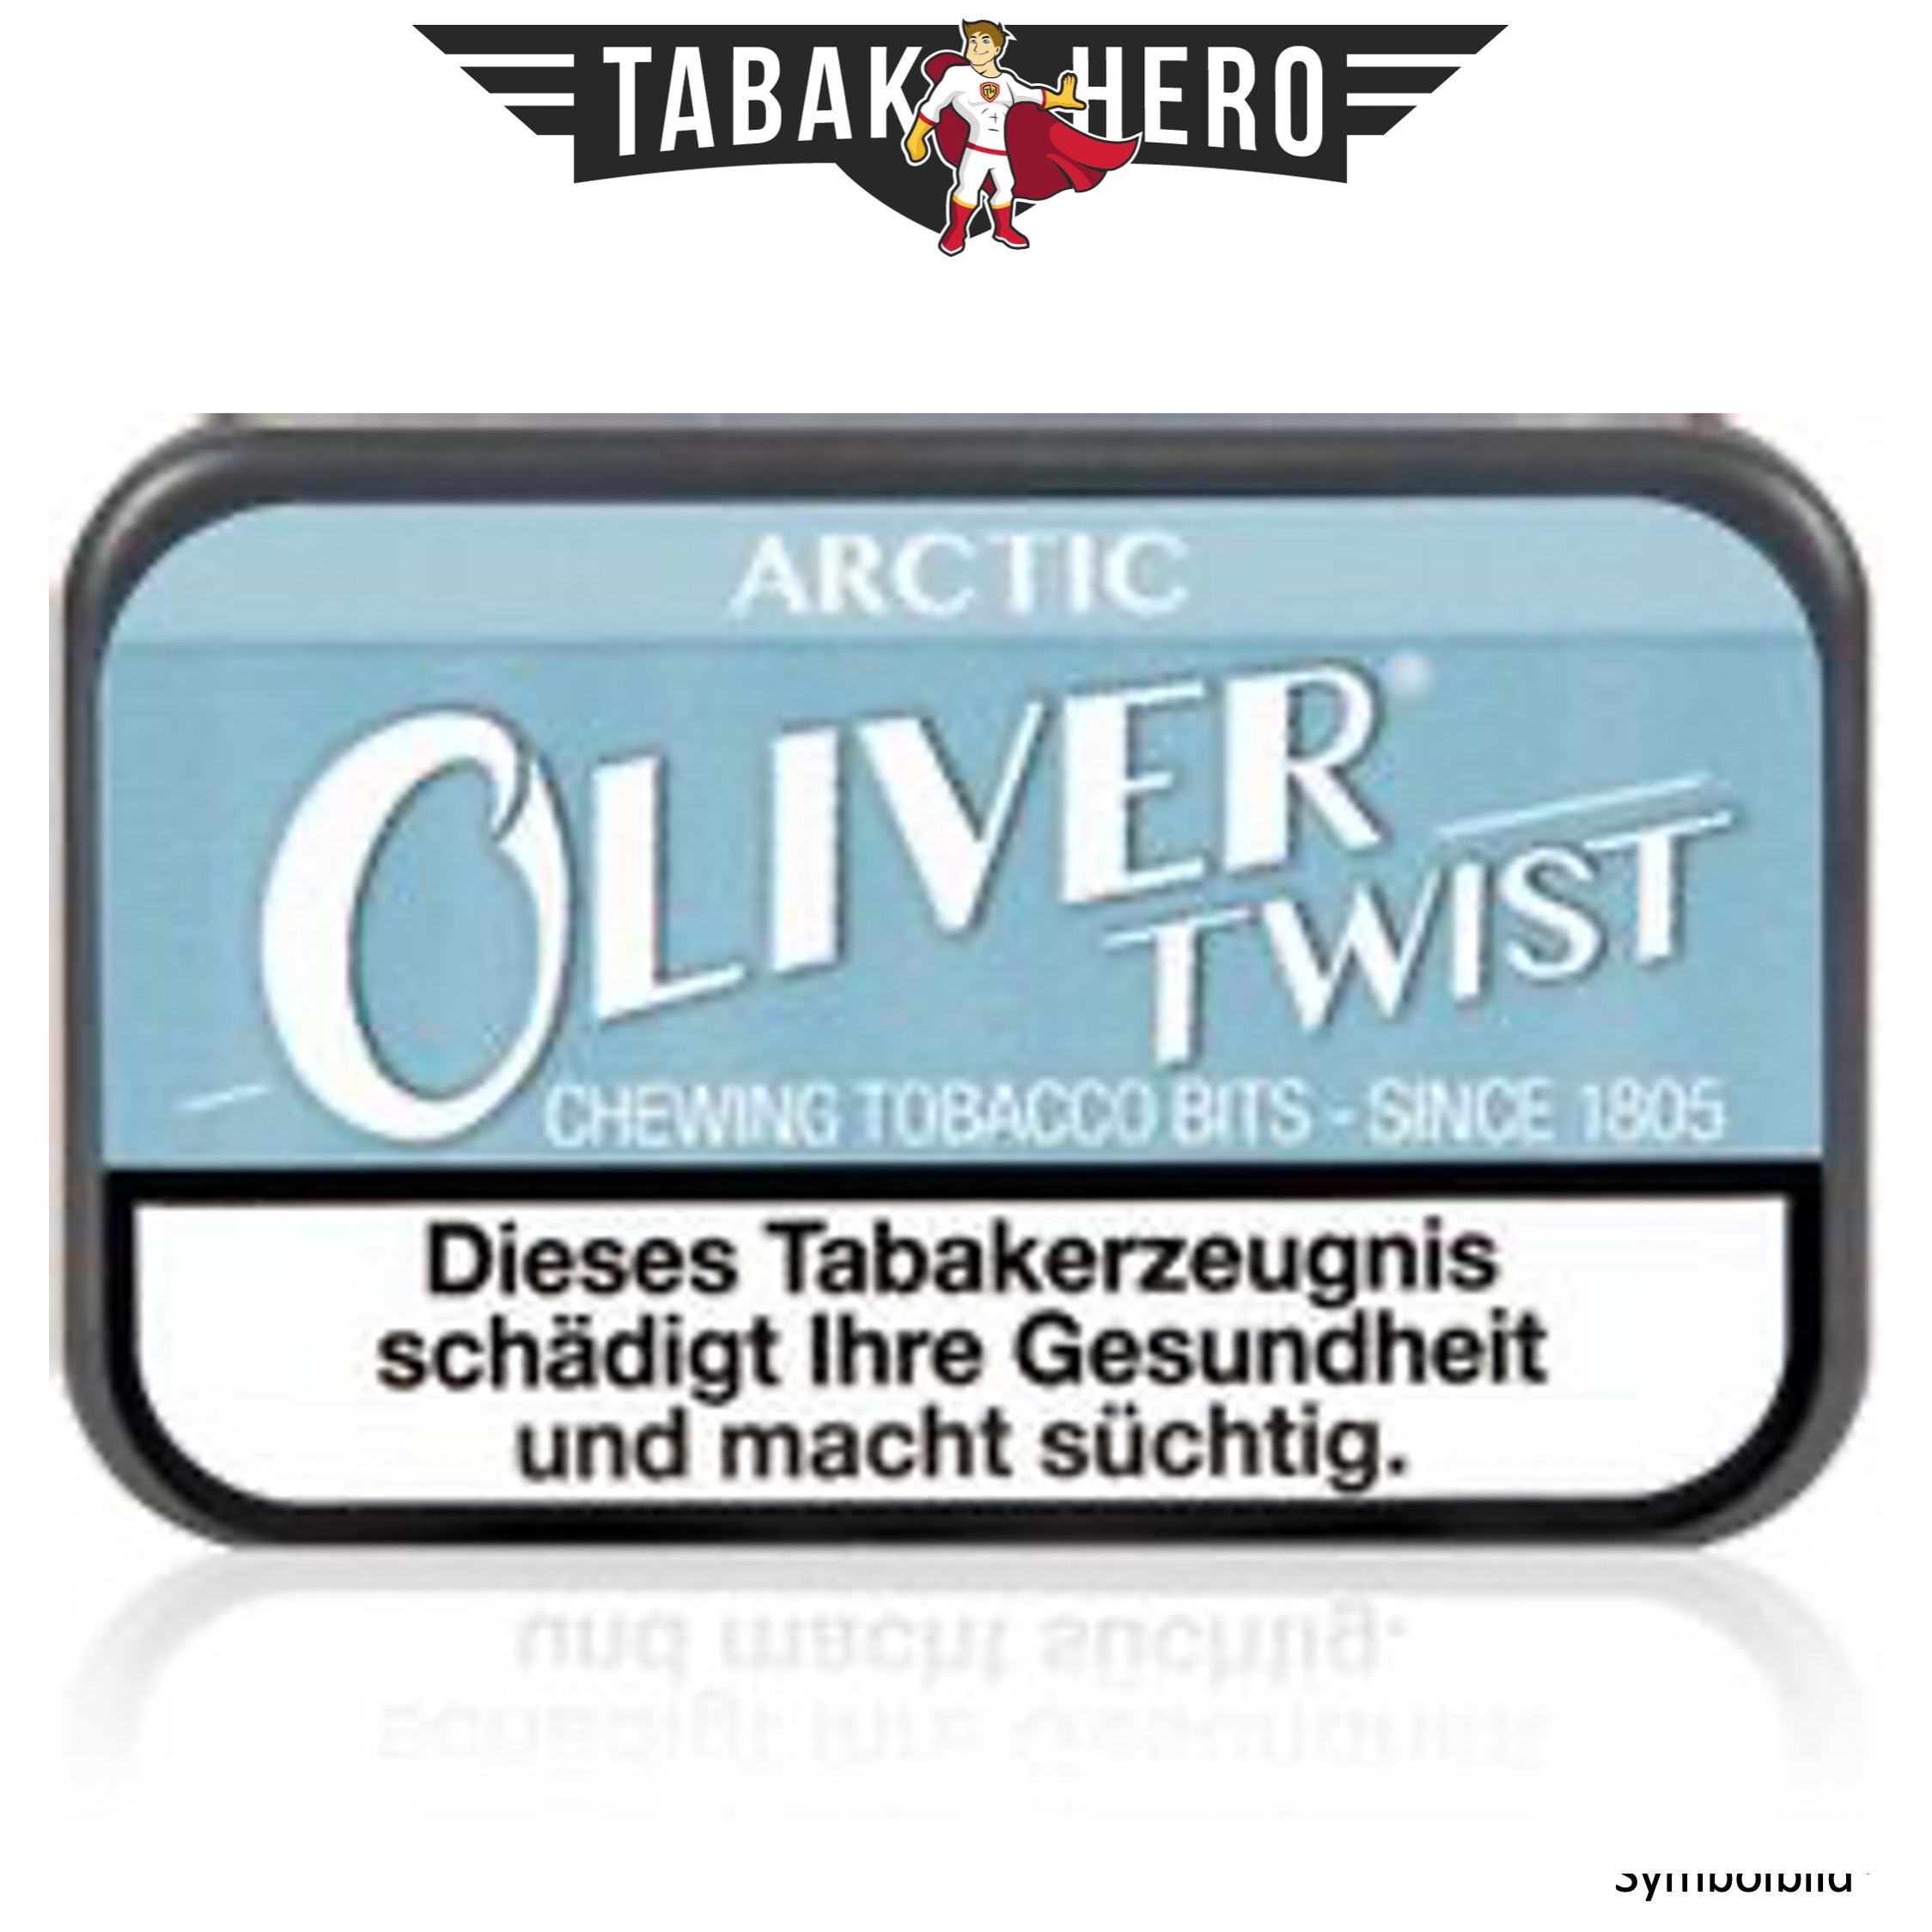 Oliver Twist Arctic Tobacco Bits Kautabakpastille / Sticks